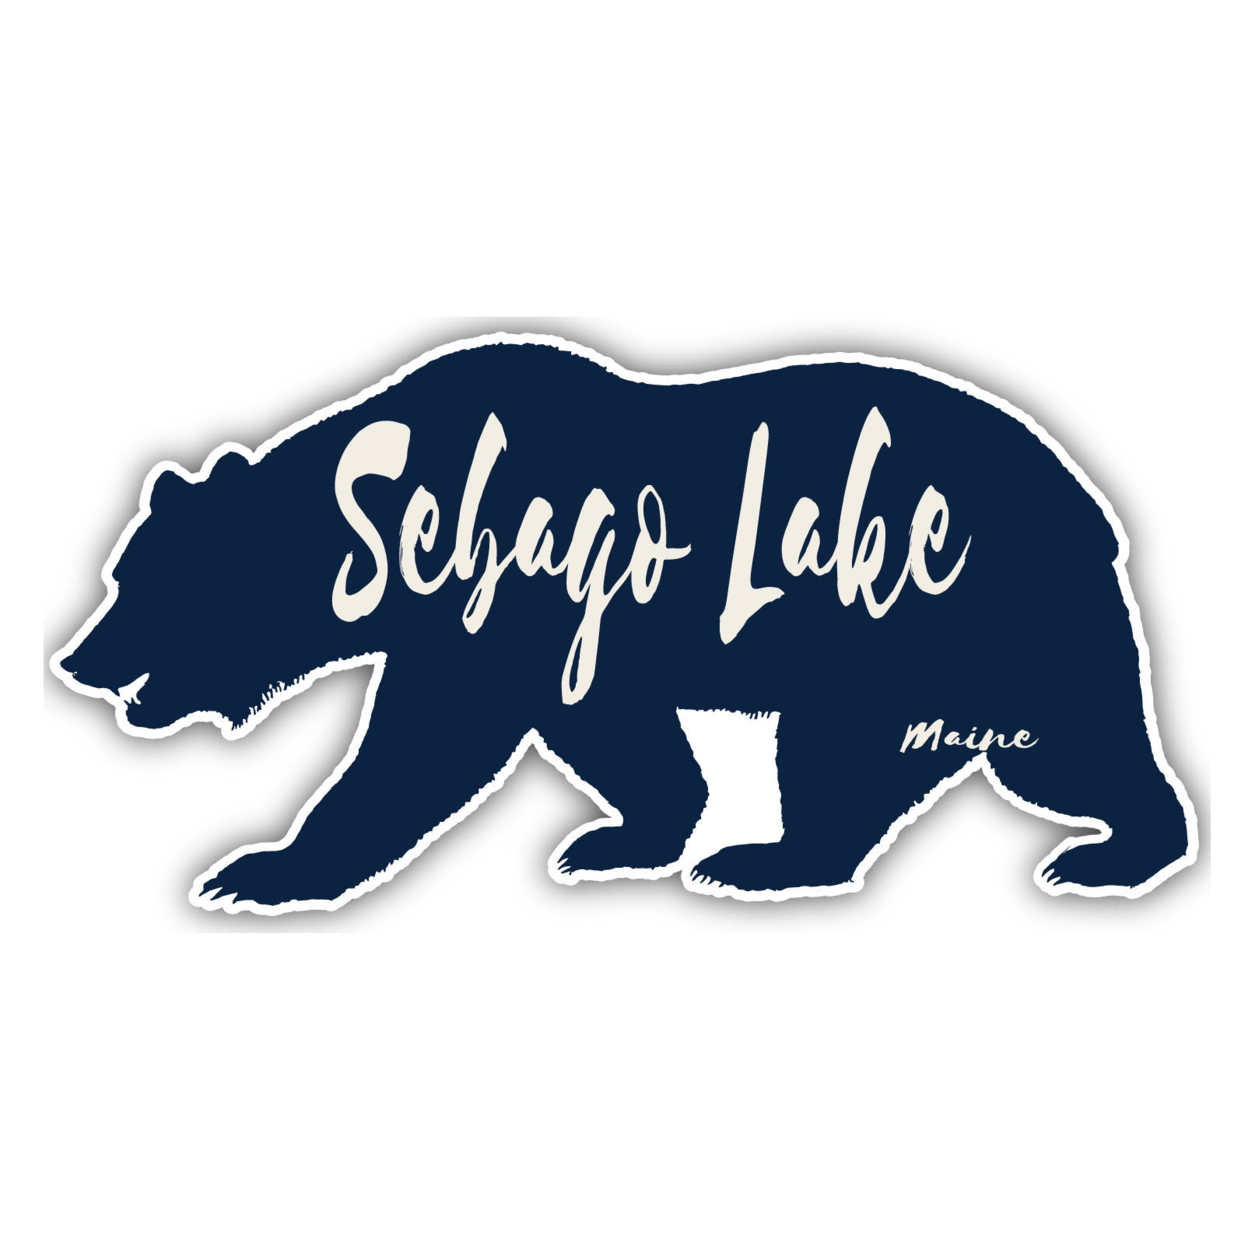 Sebago Lake Maine Souvenir Decorative Stickers (Choose Theme And Size) - Single Unit, 4-Inch, Bear